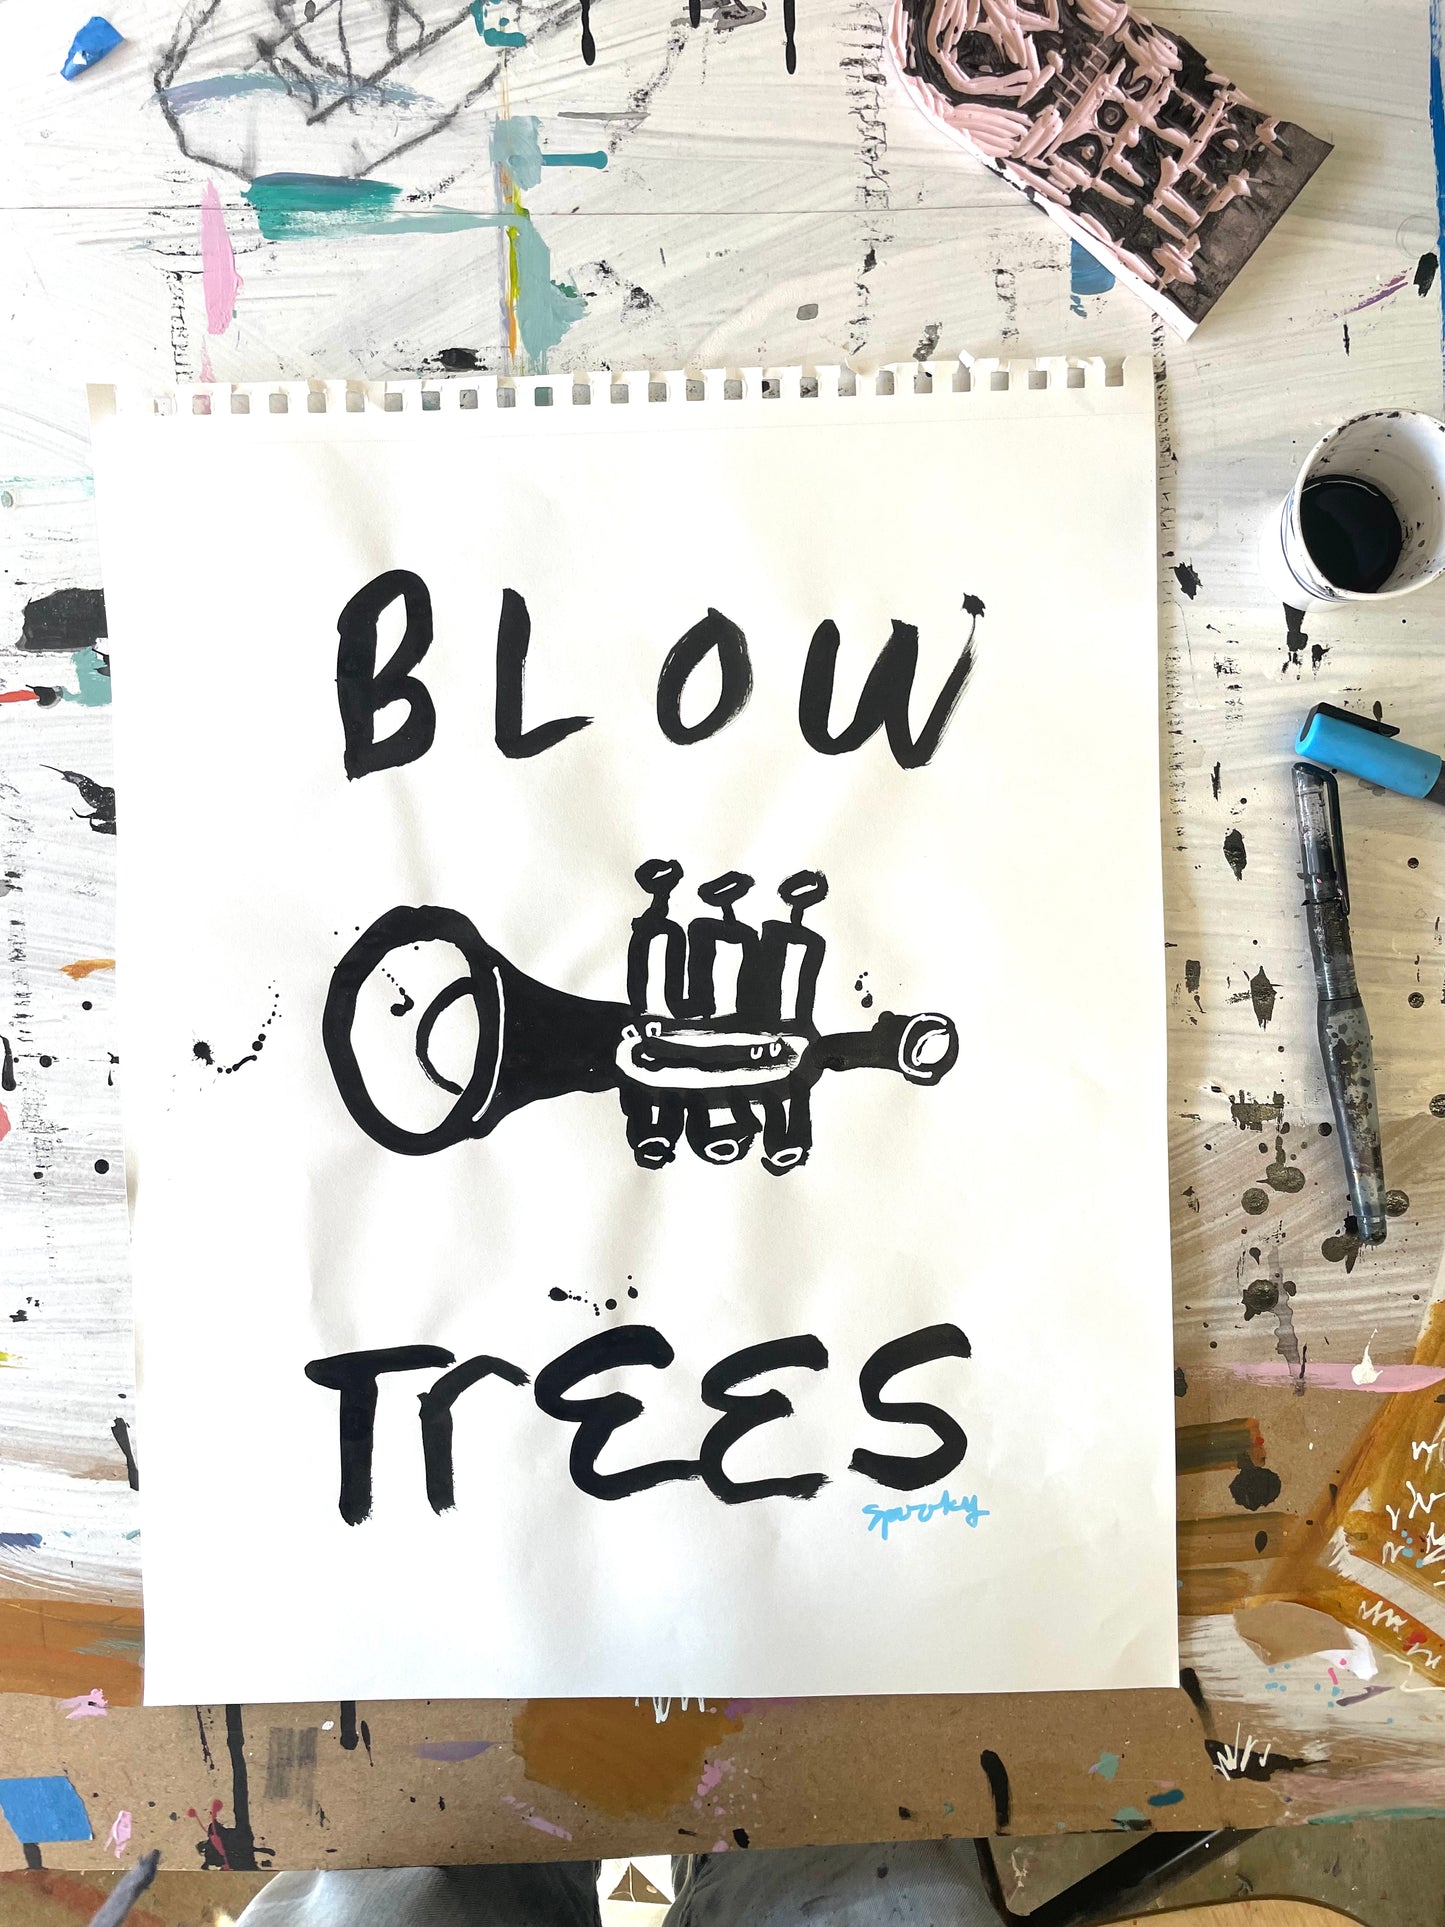 Blow Trees